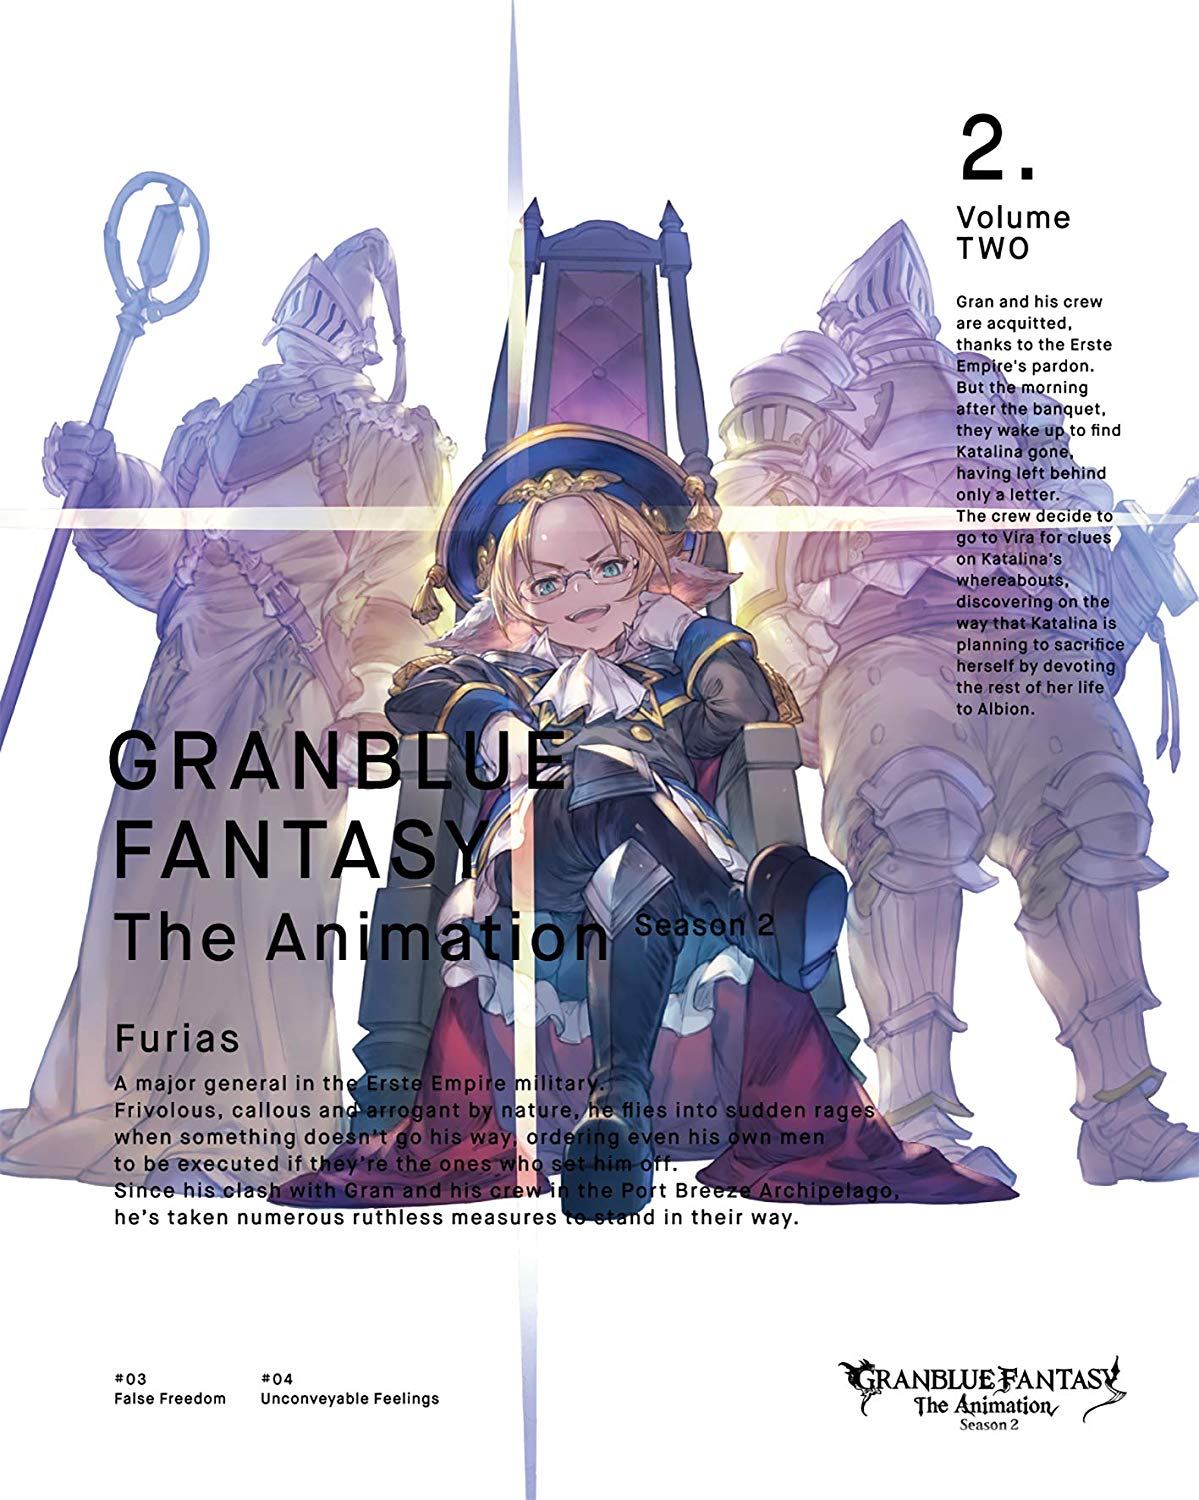 Granblue Fantasy The Animation Season 2 Vol 2 Limited Edition